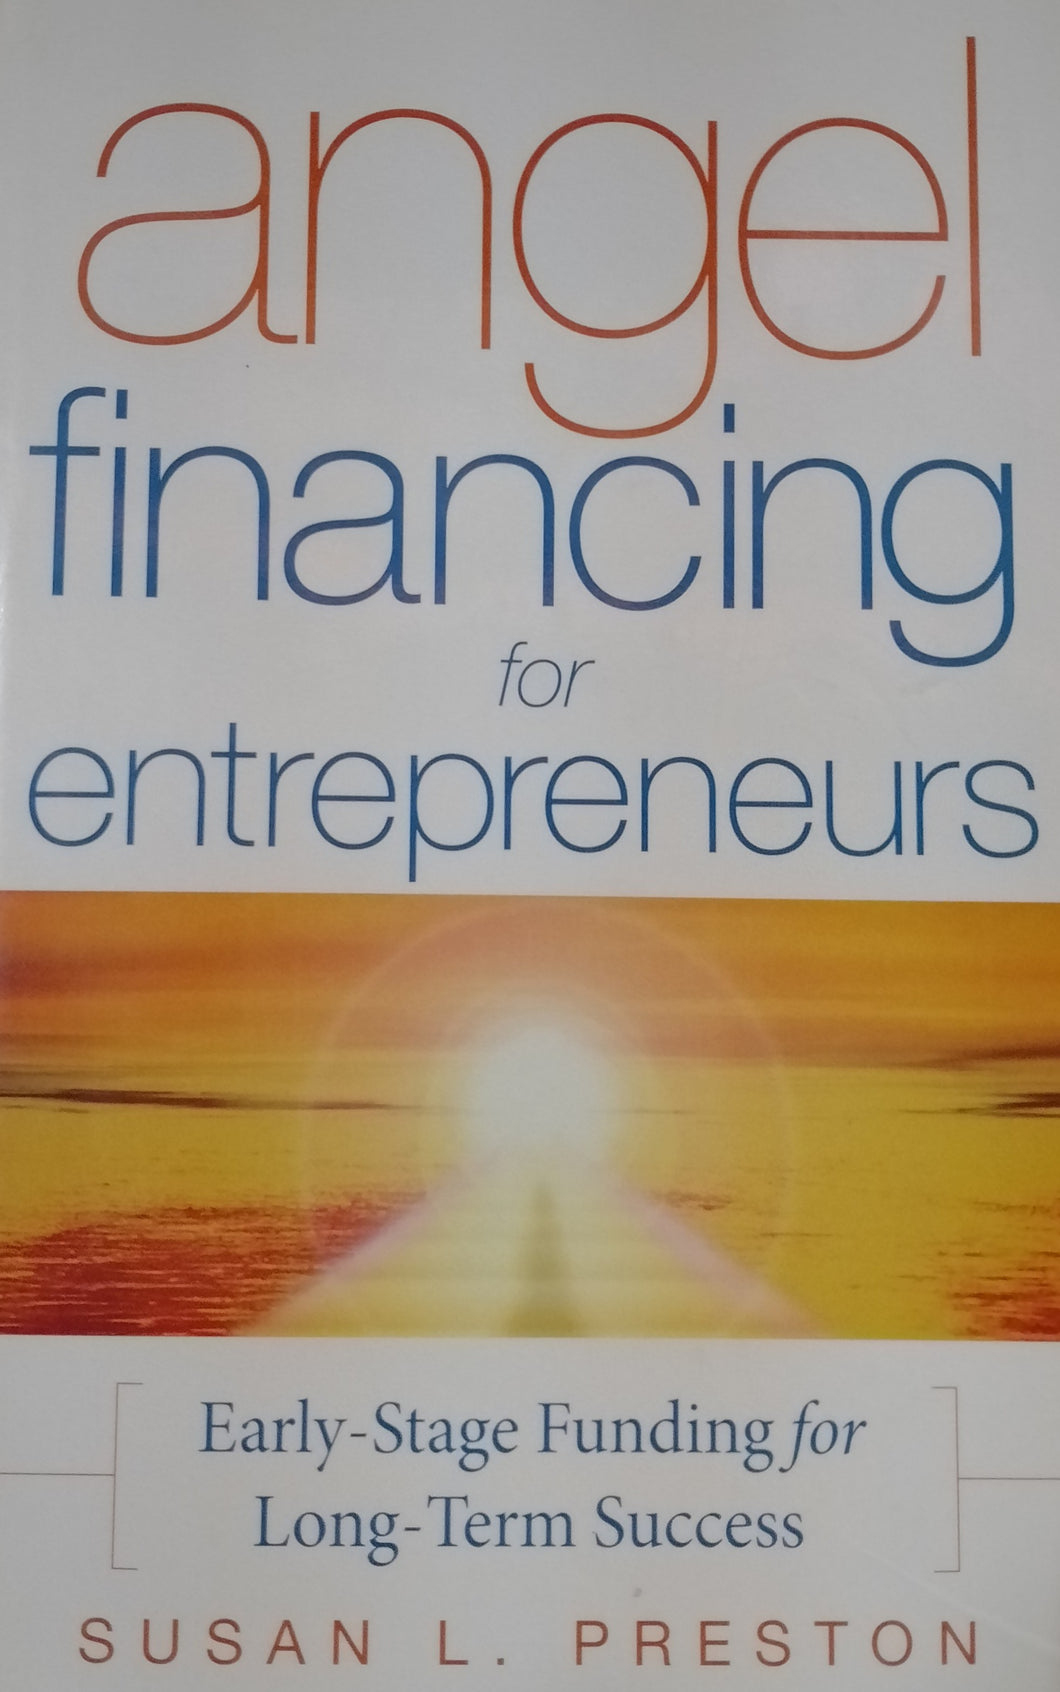 Angel Financing For Entrepreneura by Susan L. Preston